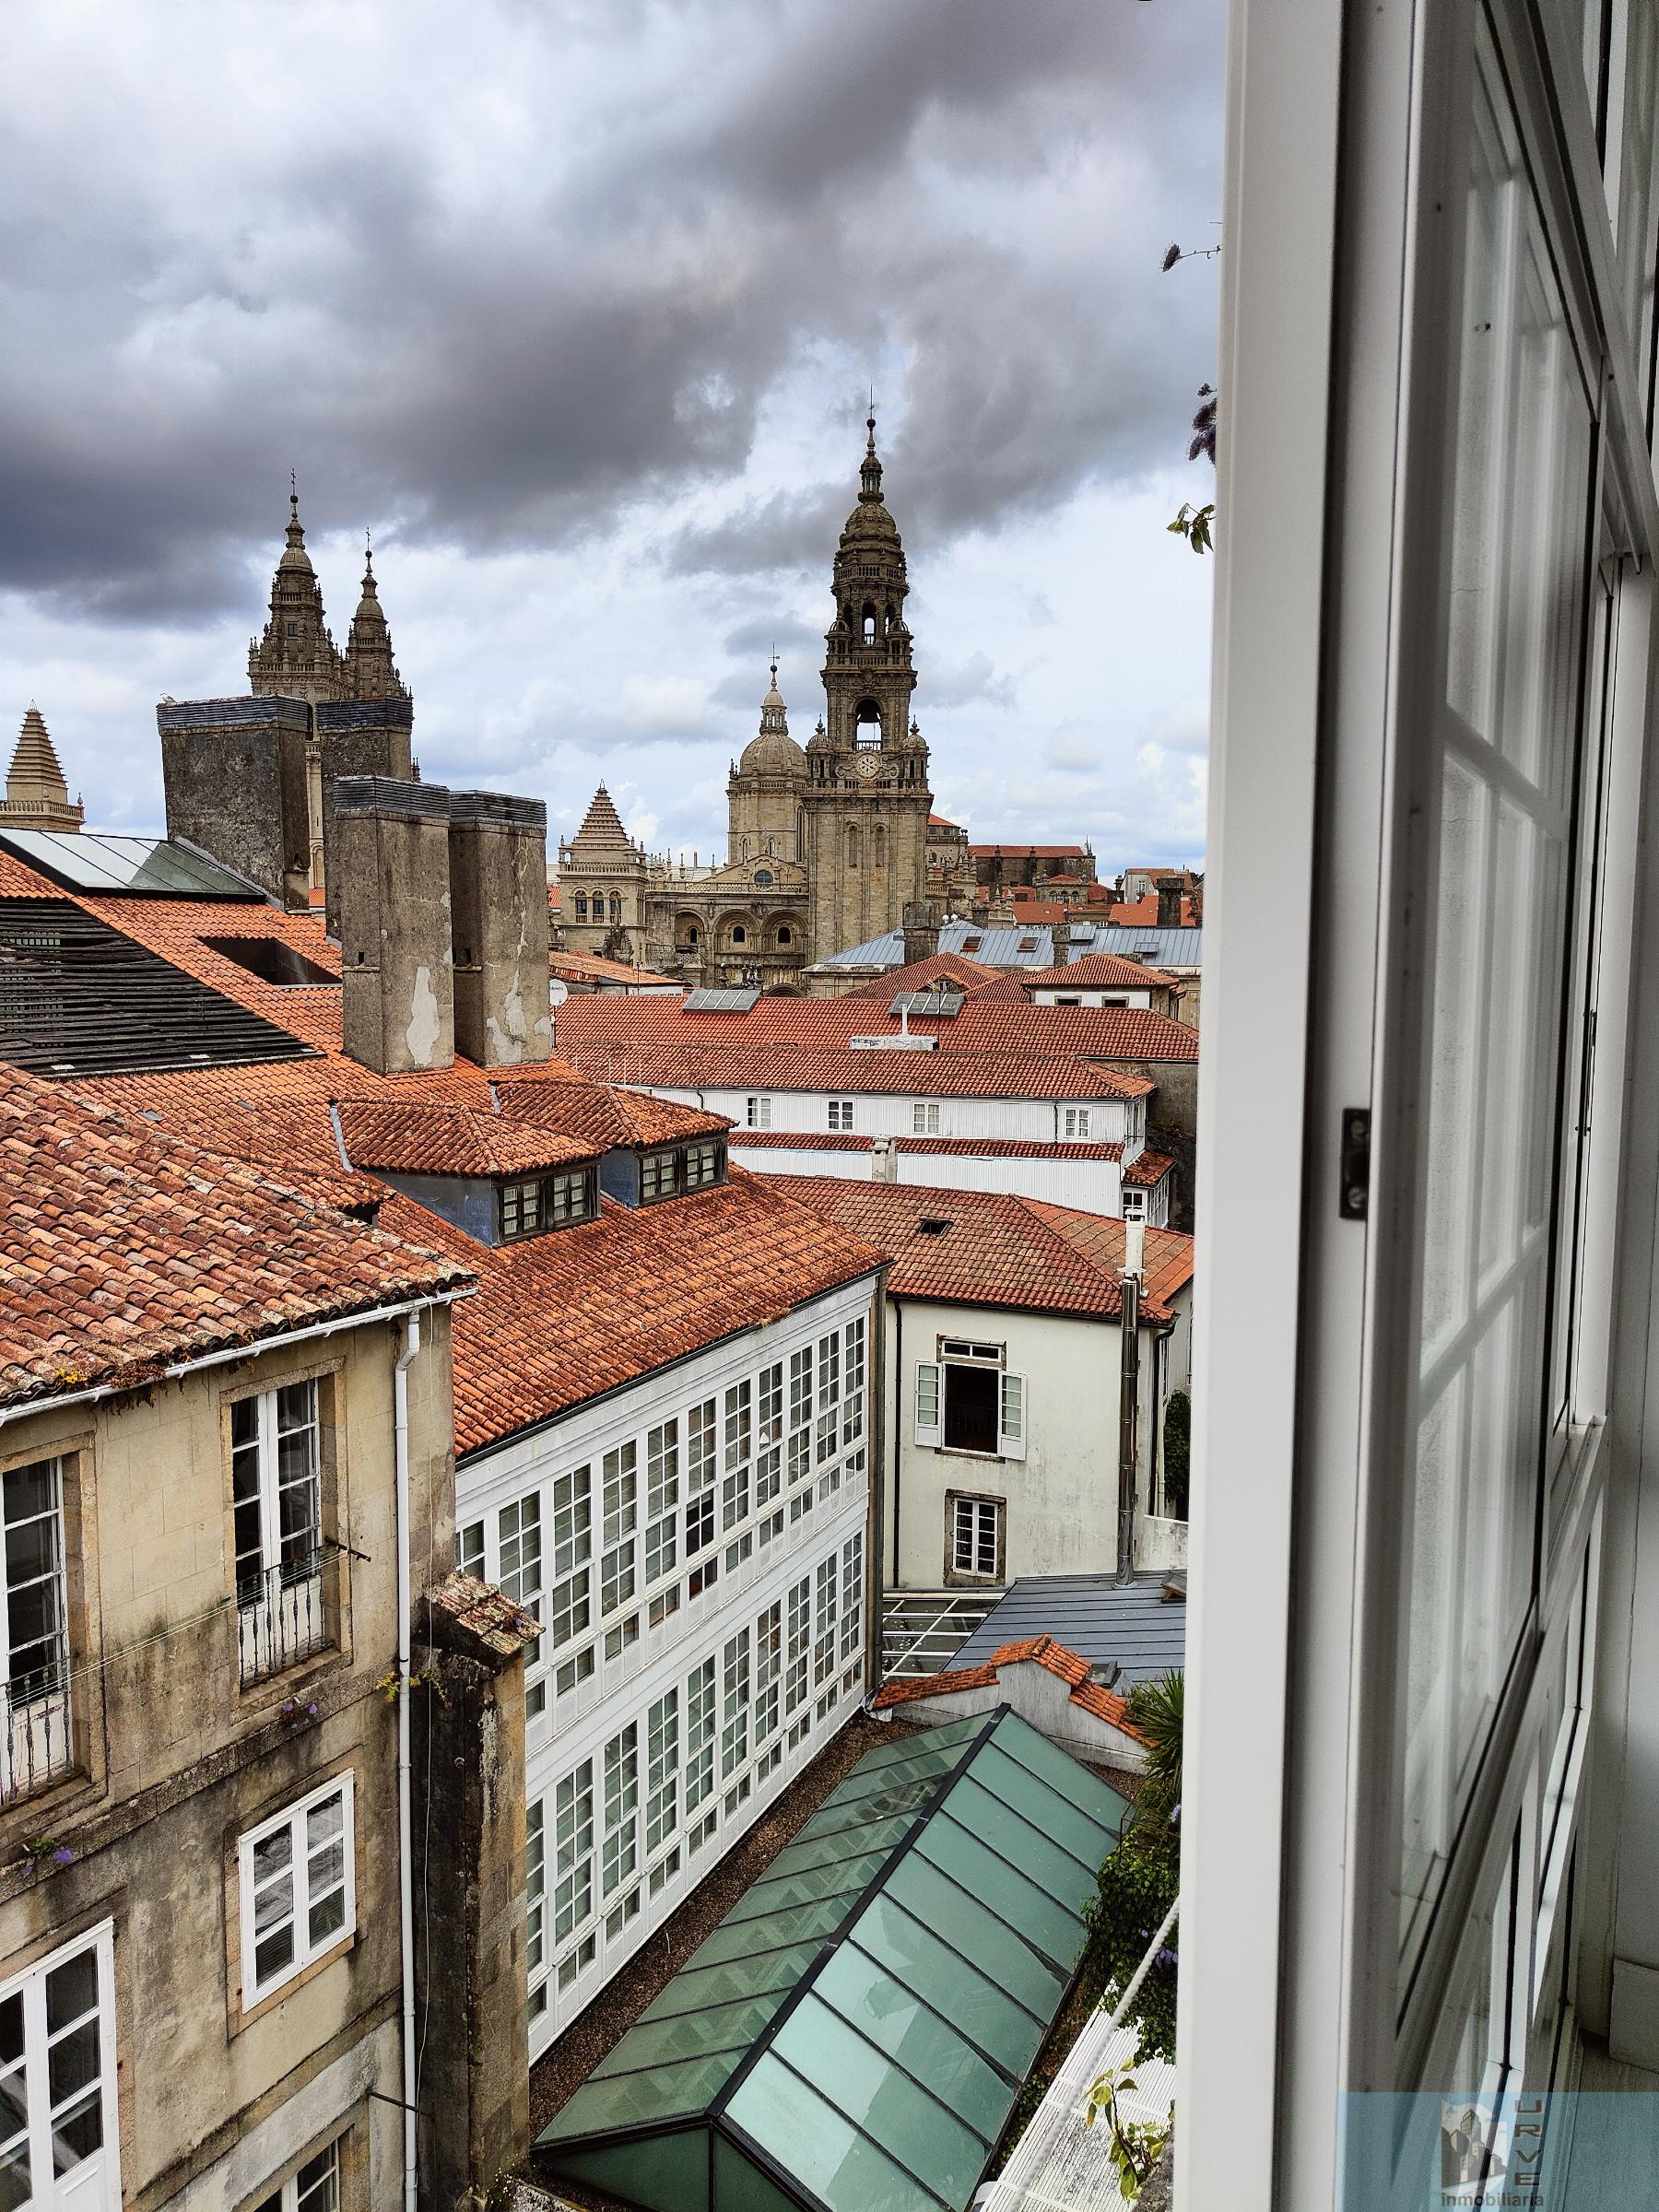 Alquiler de piso en Santiago de Compostela